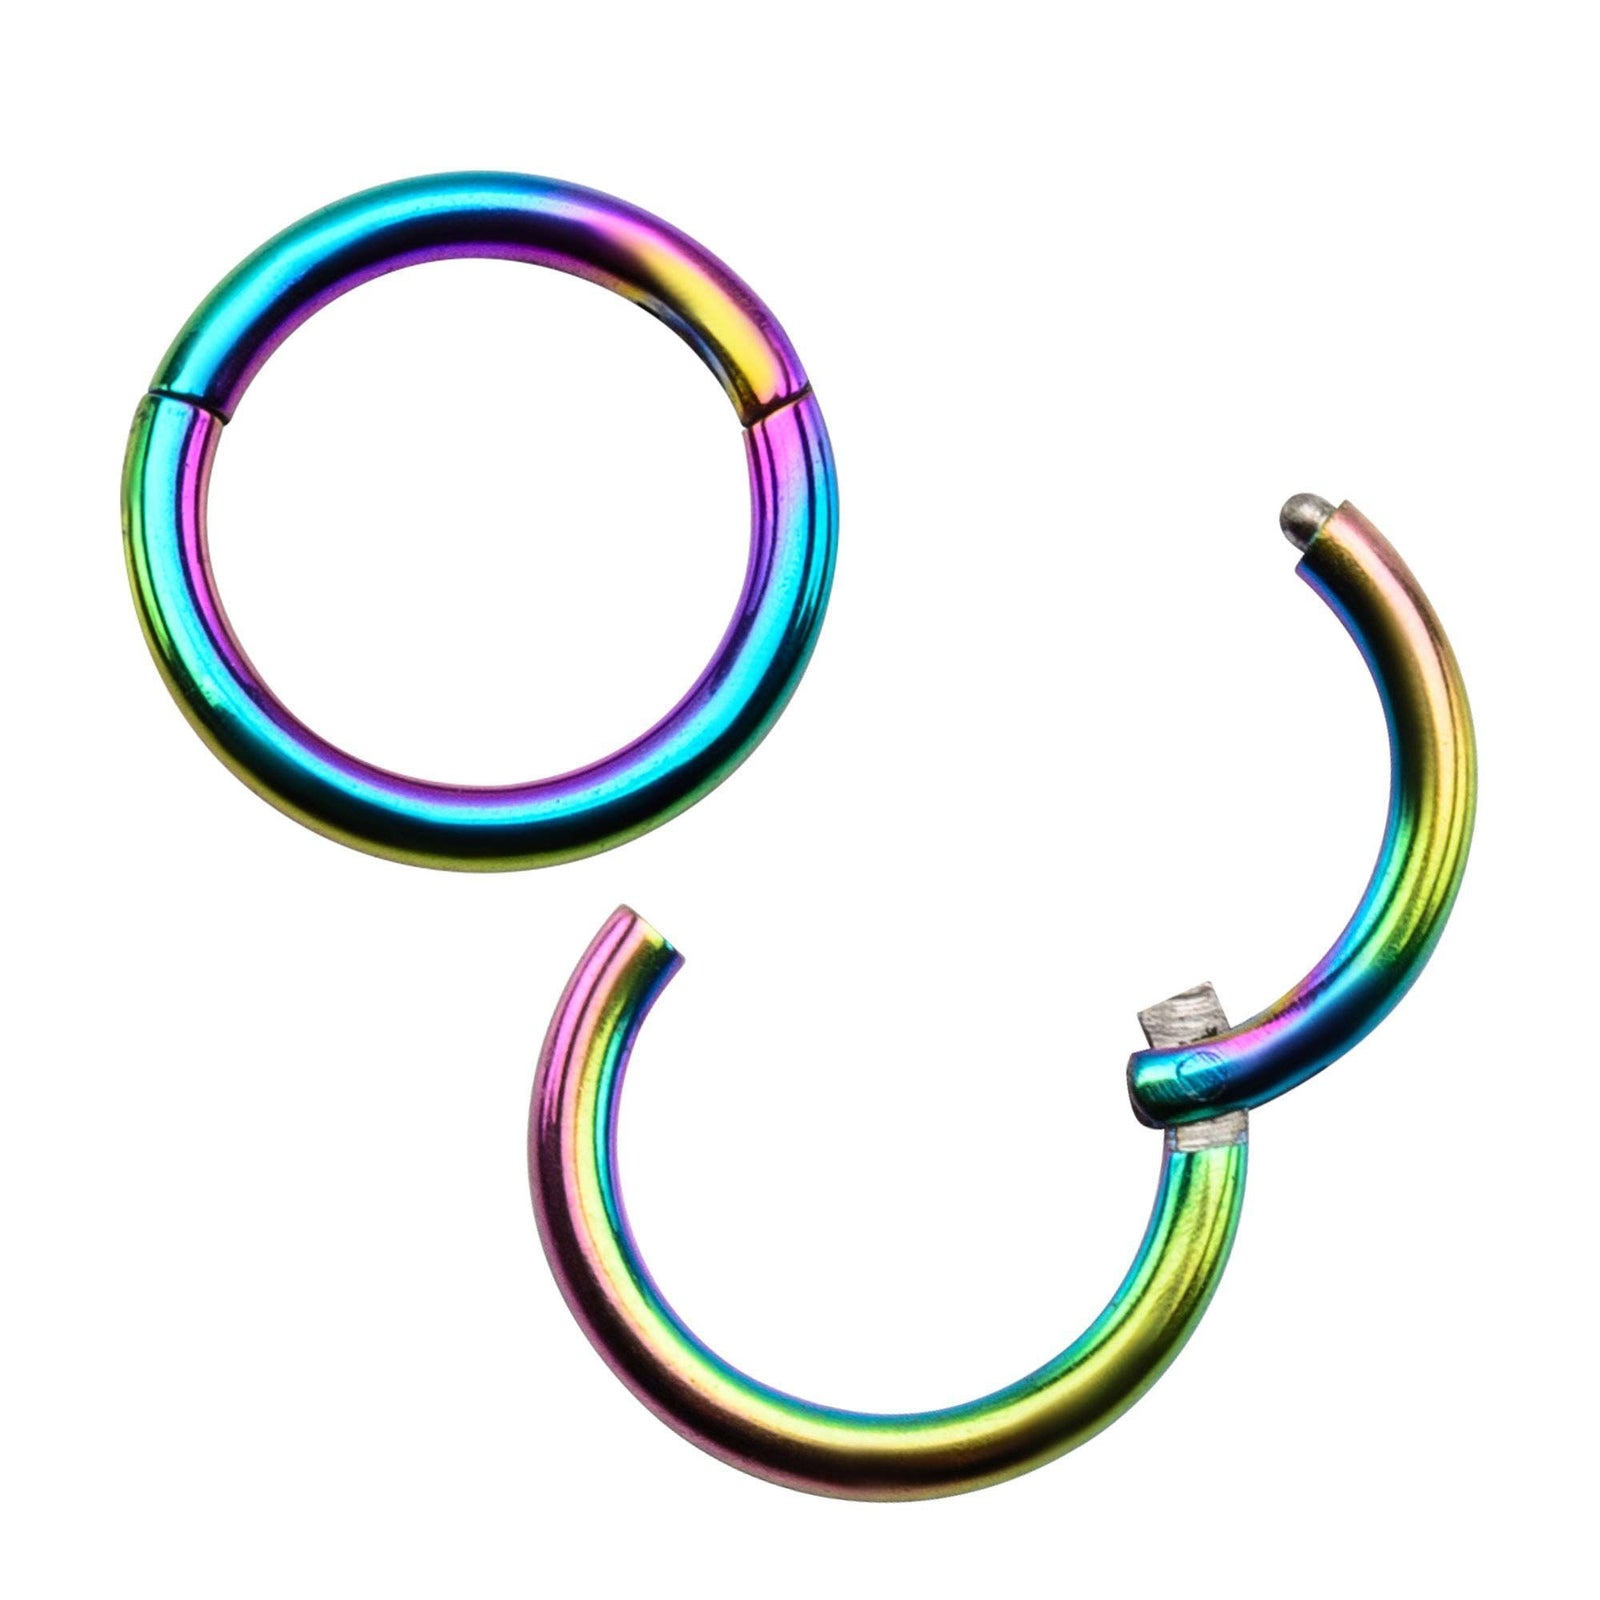 SEGMENT RING/Nose Ring/Tragus/Rook/Snug/Conch/Septum/Daith Ring Rainbow Titanium Plated Hinged Segment Rings sbvsgrhw -Rebel Bod-RebelBod